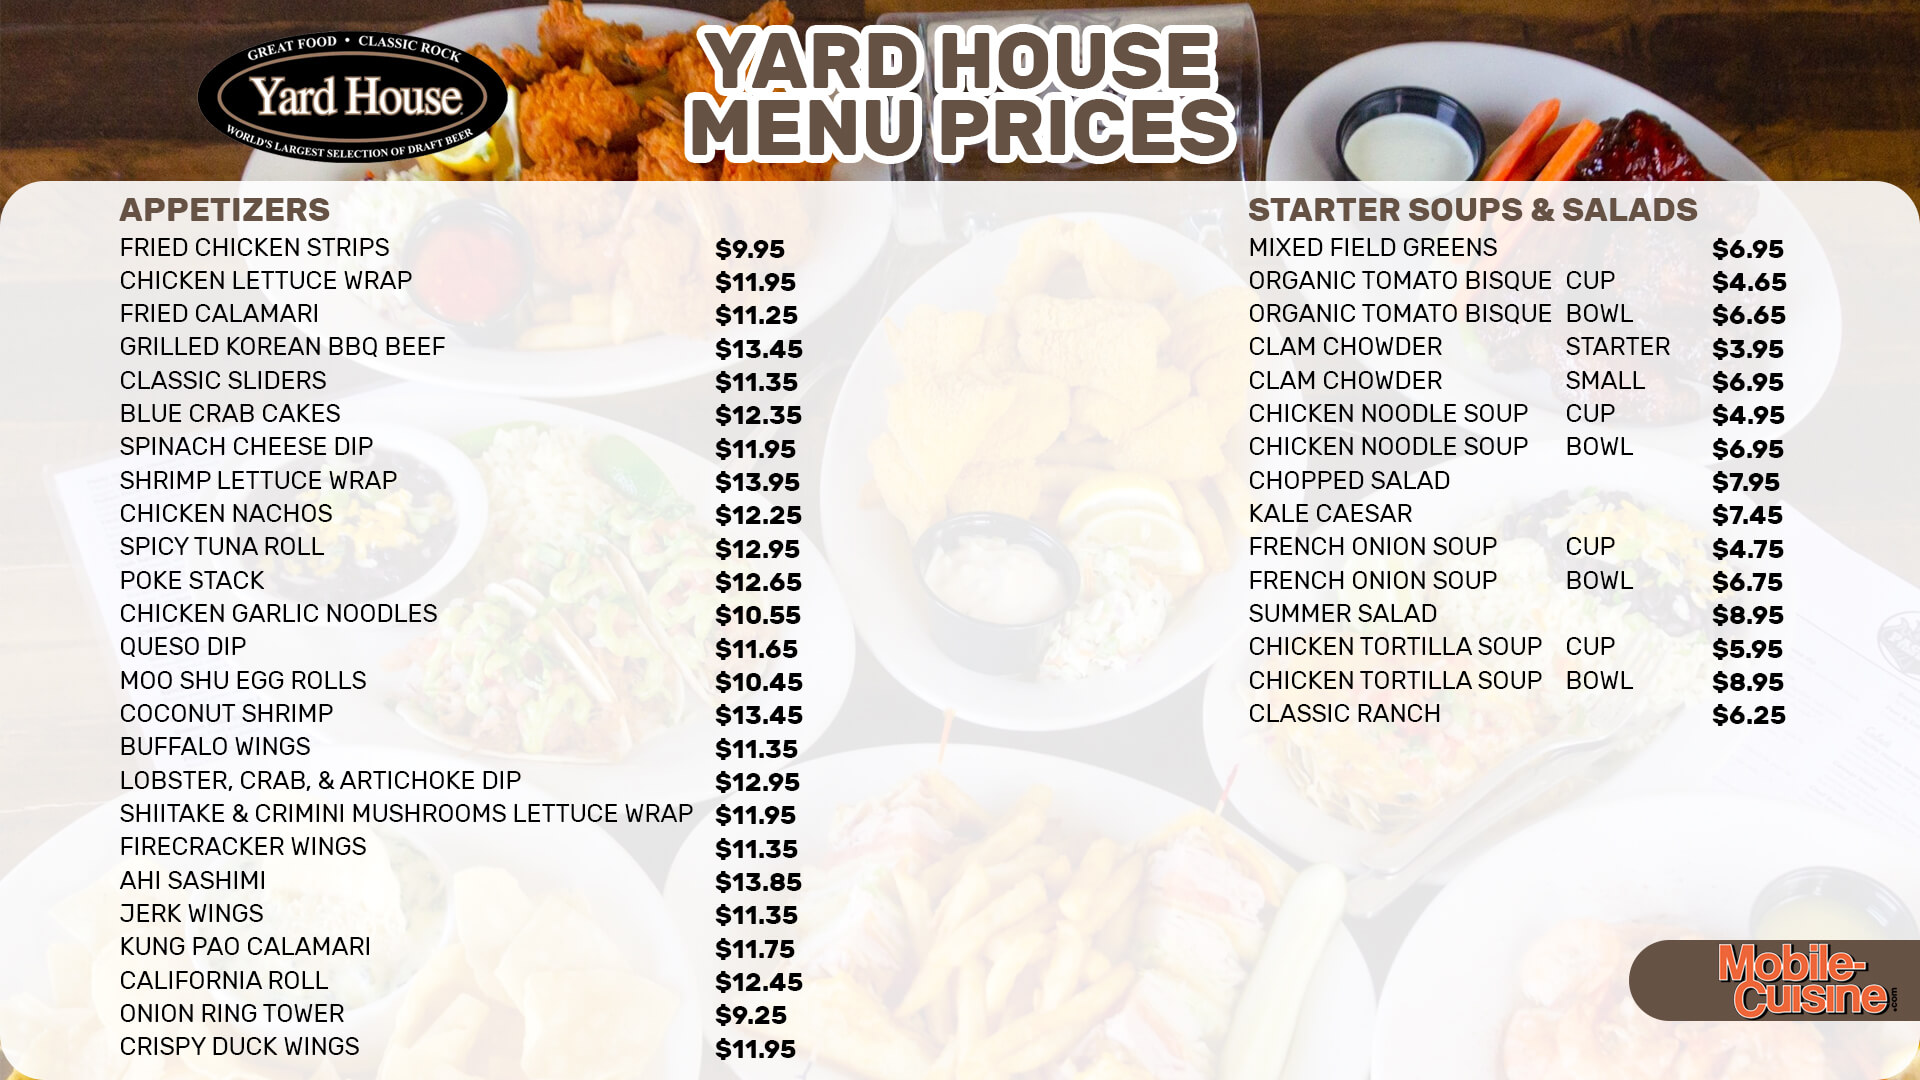 Yard House menu prices